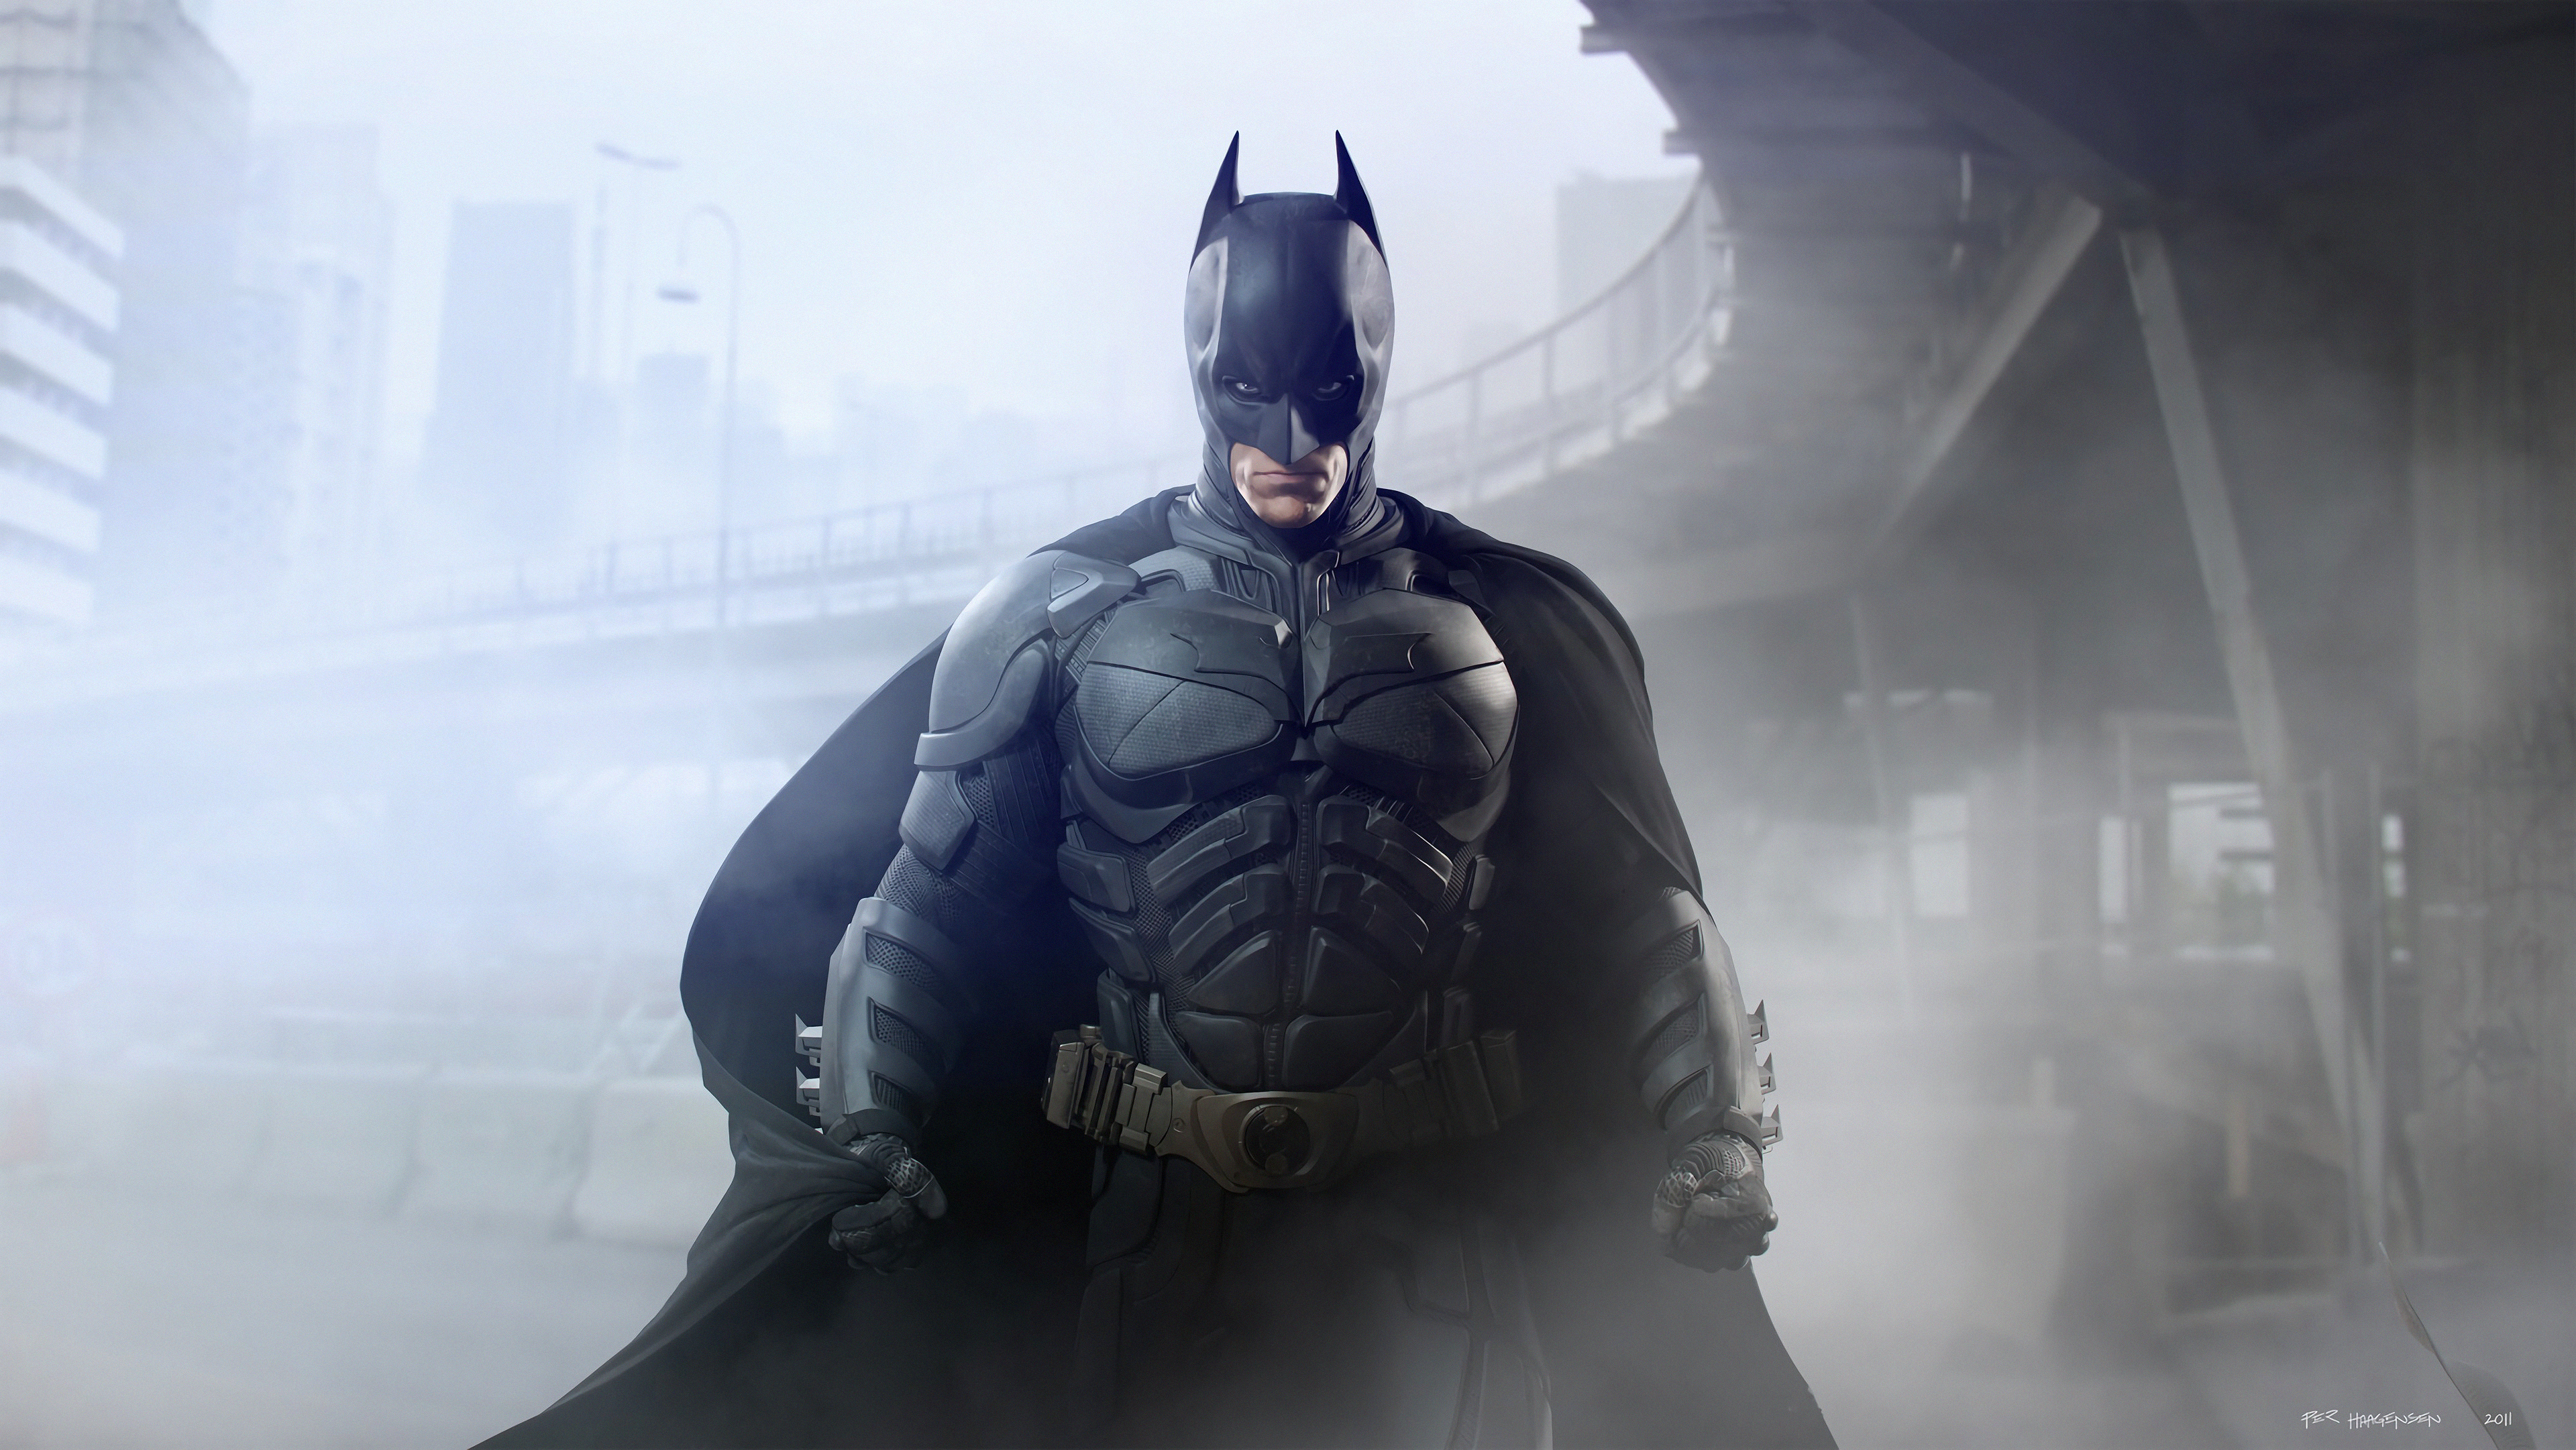 Descarga gratuita de fondo de pantalla para móvil de Películas, The Batman, Dc Comics, Hombre Murciélago, El Caballero Oscuro: La Leyenda Renace.